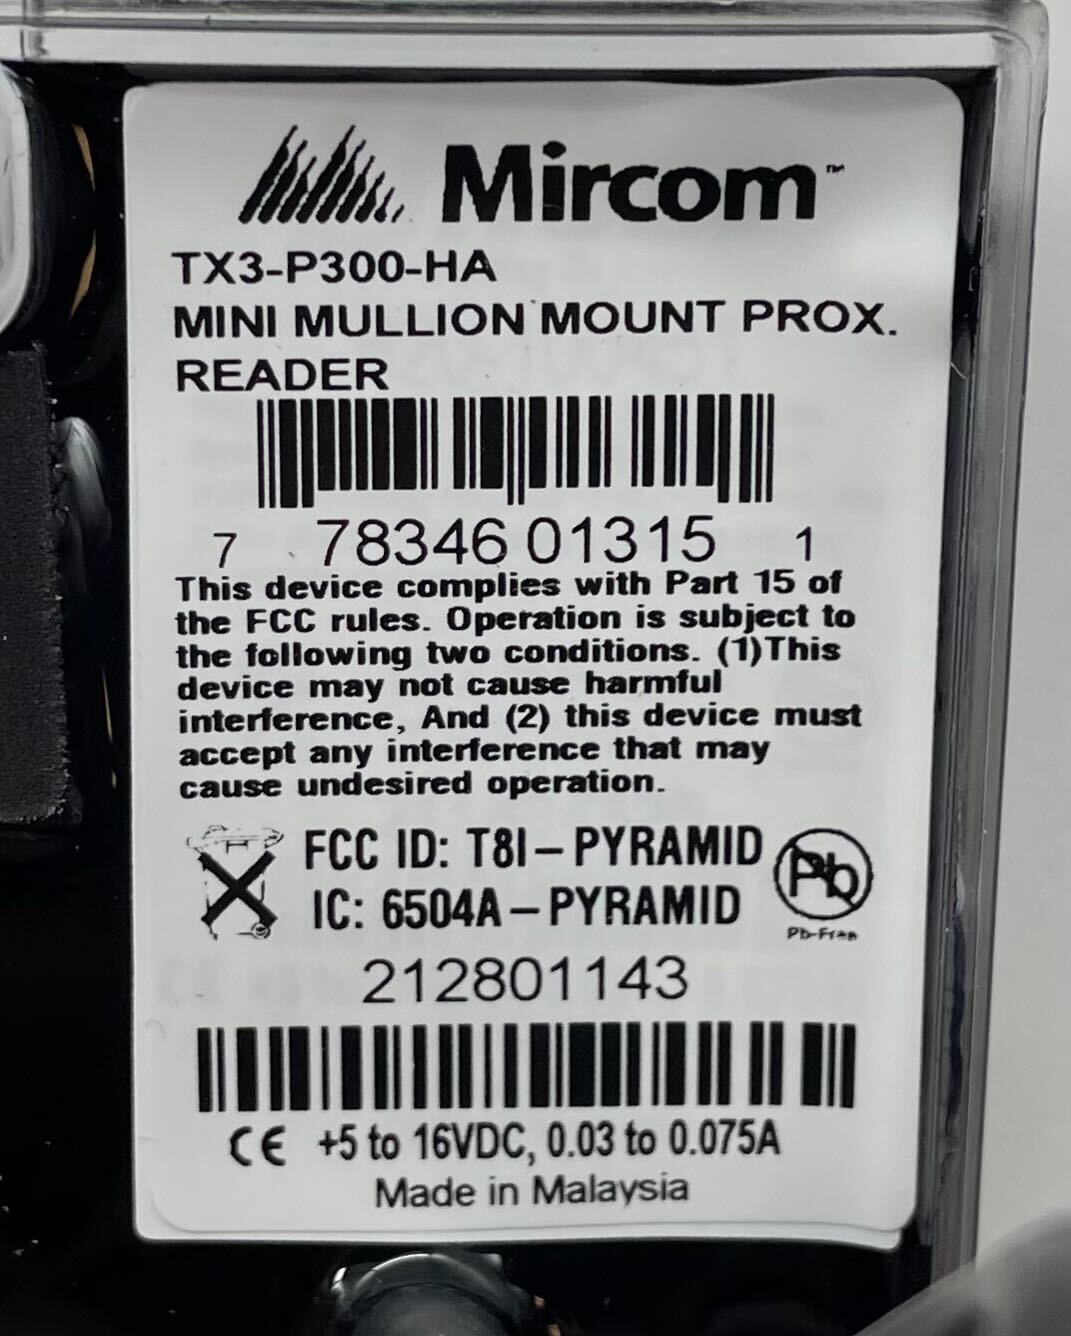 Mircom TX3-P300-HA Mini Mullion Mount Reader - The Fire Alarm Supplier